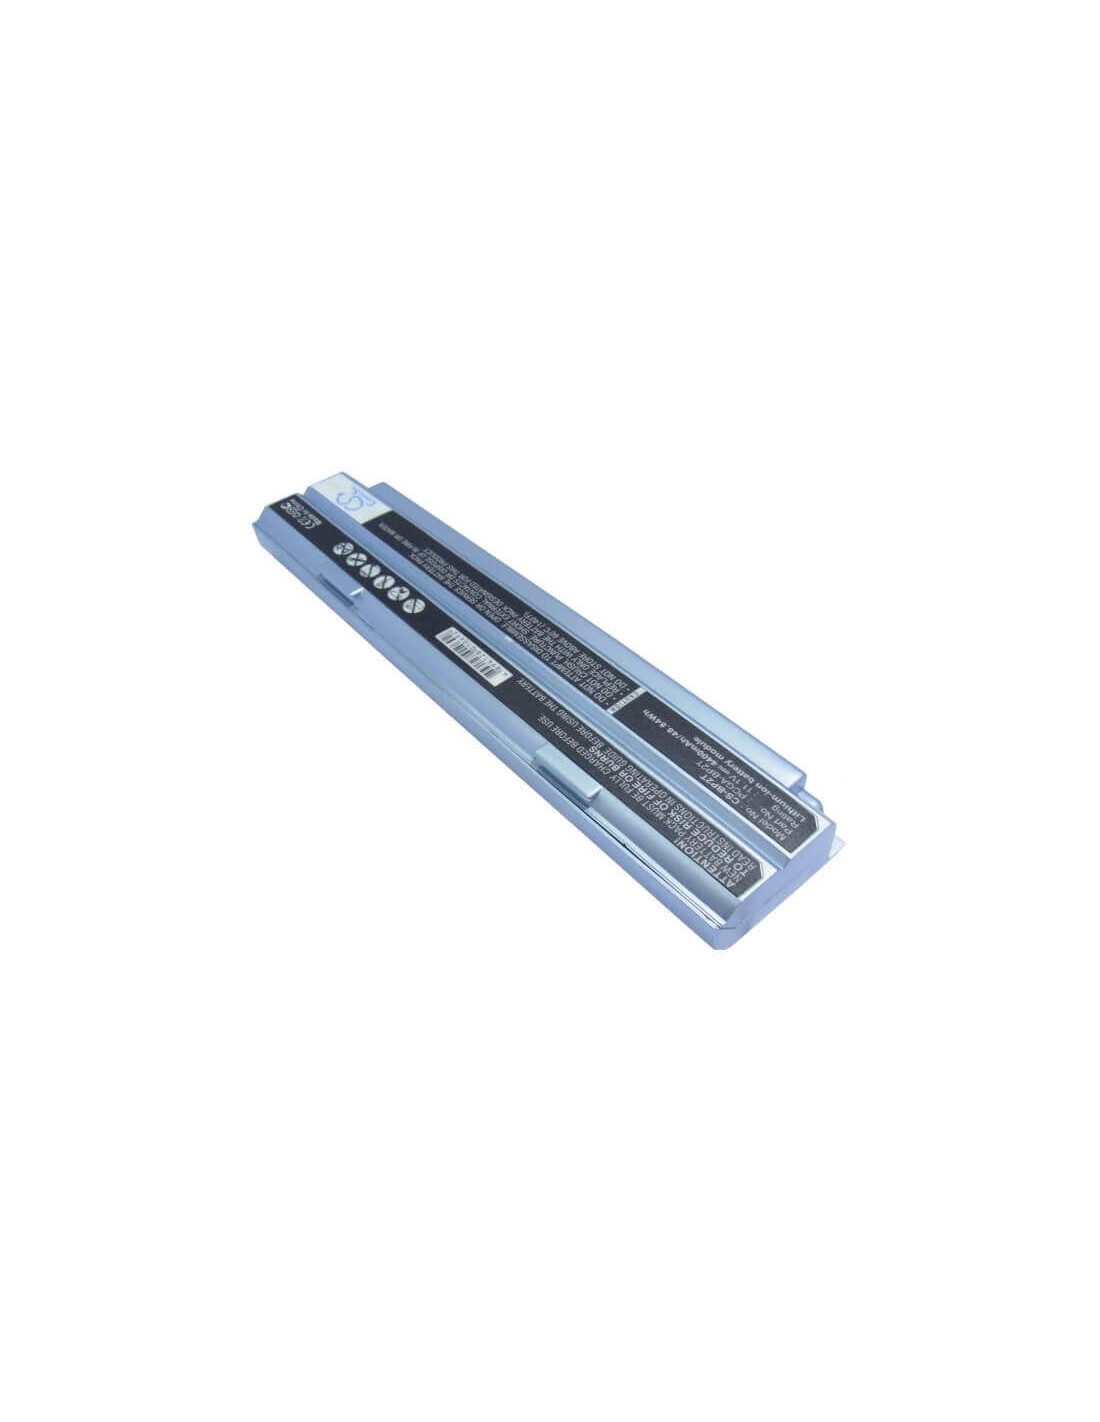 Silver Battery for Sony Vaio Pcg-tr1ap, Vaio Pcg-tr1, Vaio Pcg-tr5ps 11.1V, 4400mAh - 48.84Wh